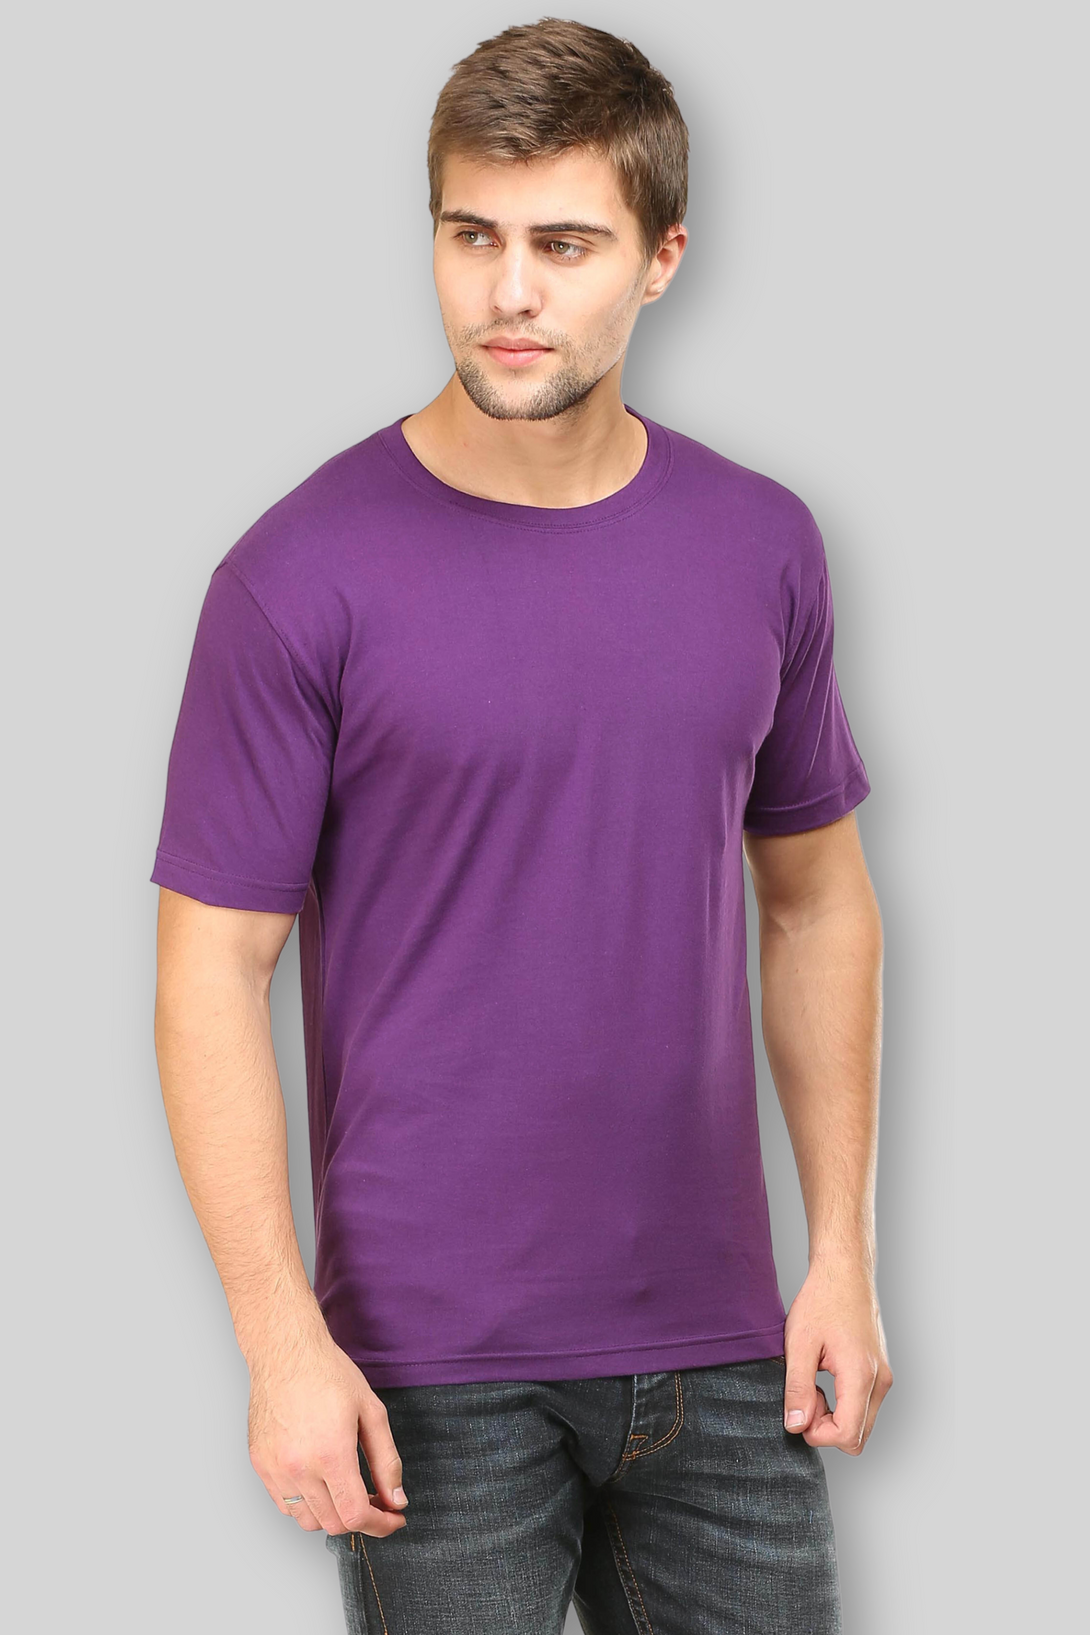 Purple T-Shirt For Men - WowWaves - 3